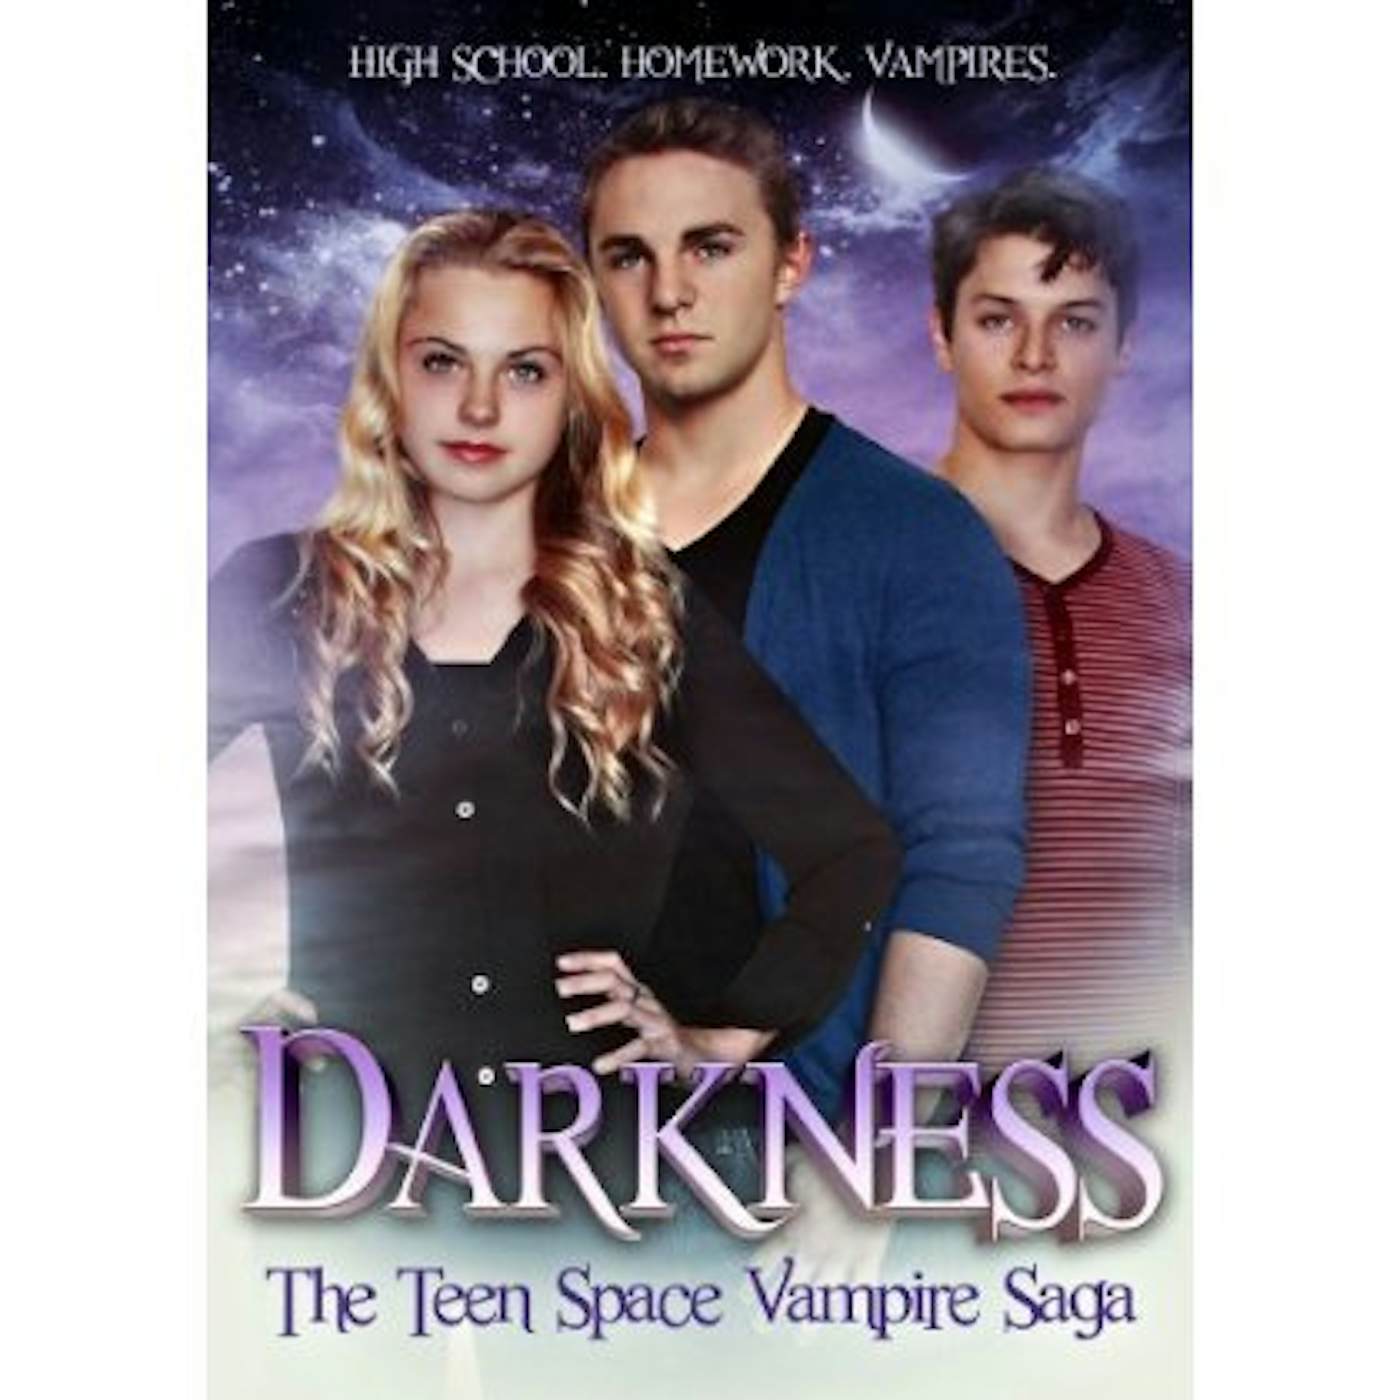 The Darkness (TEENAGE SPACE VAMPIRES) DVD